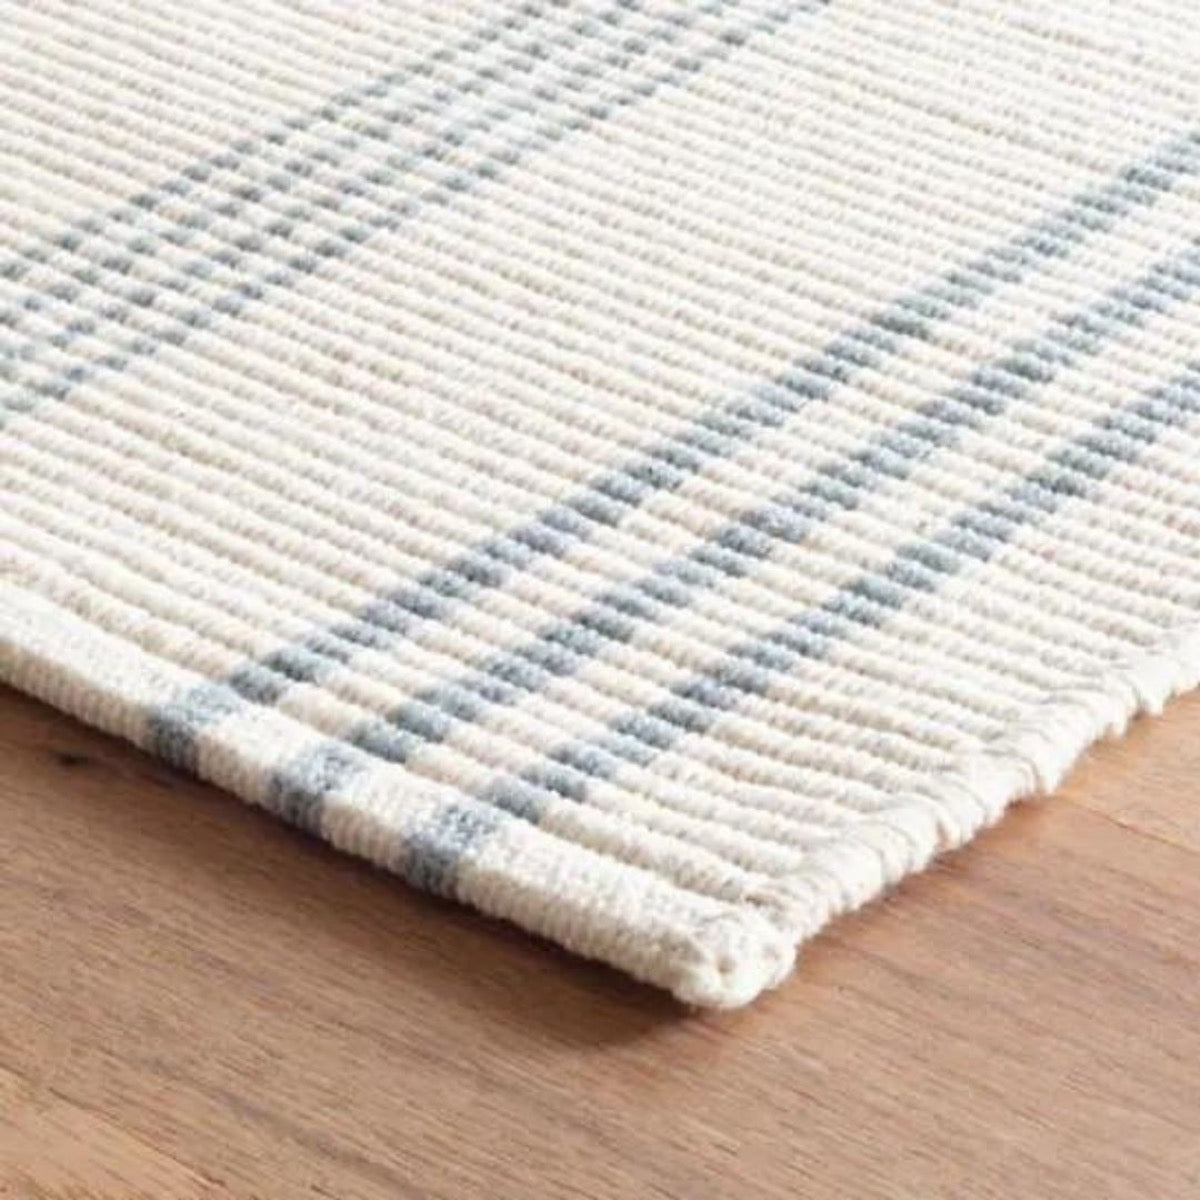 Swedish Stripe Woven Cotton Rug. Top view.